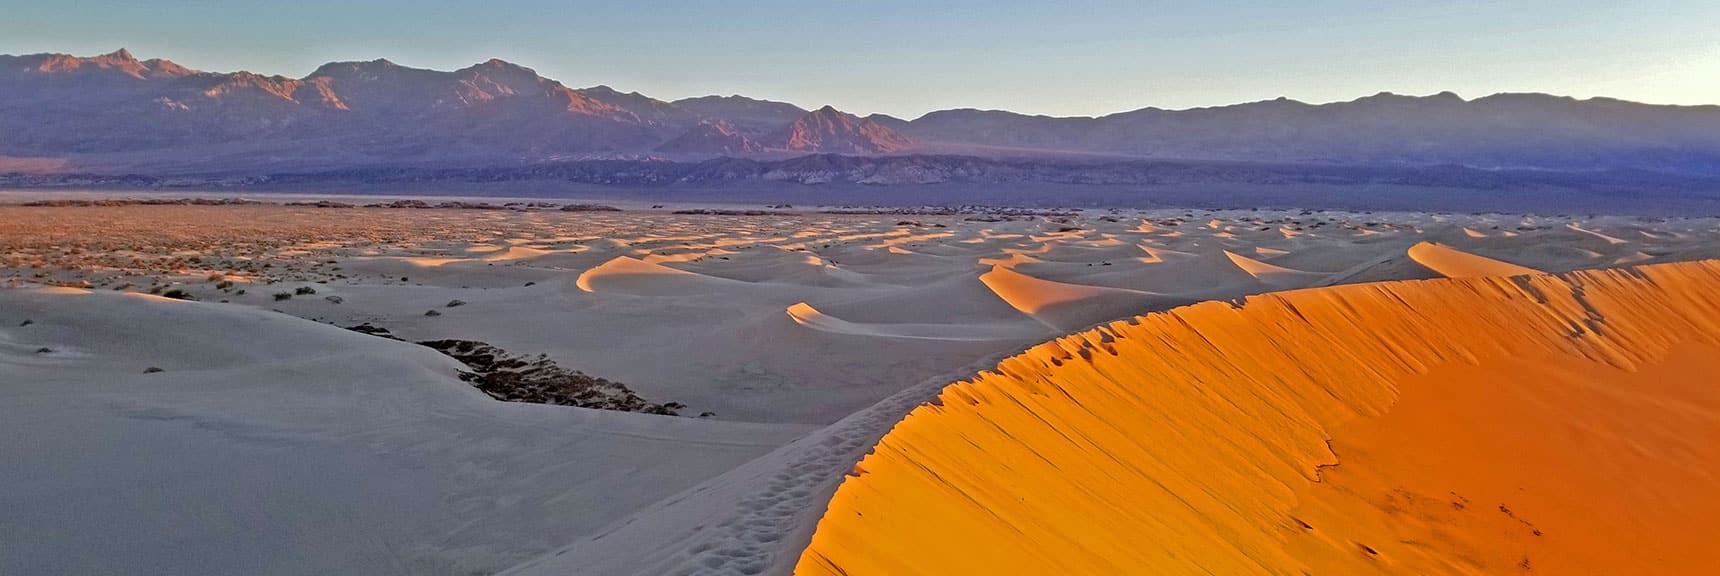 View Northeast| Mesquite Sand Dunes Sunrise | Death Valley National Park, California